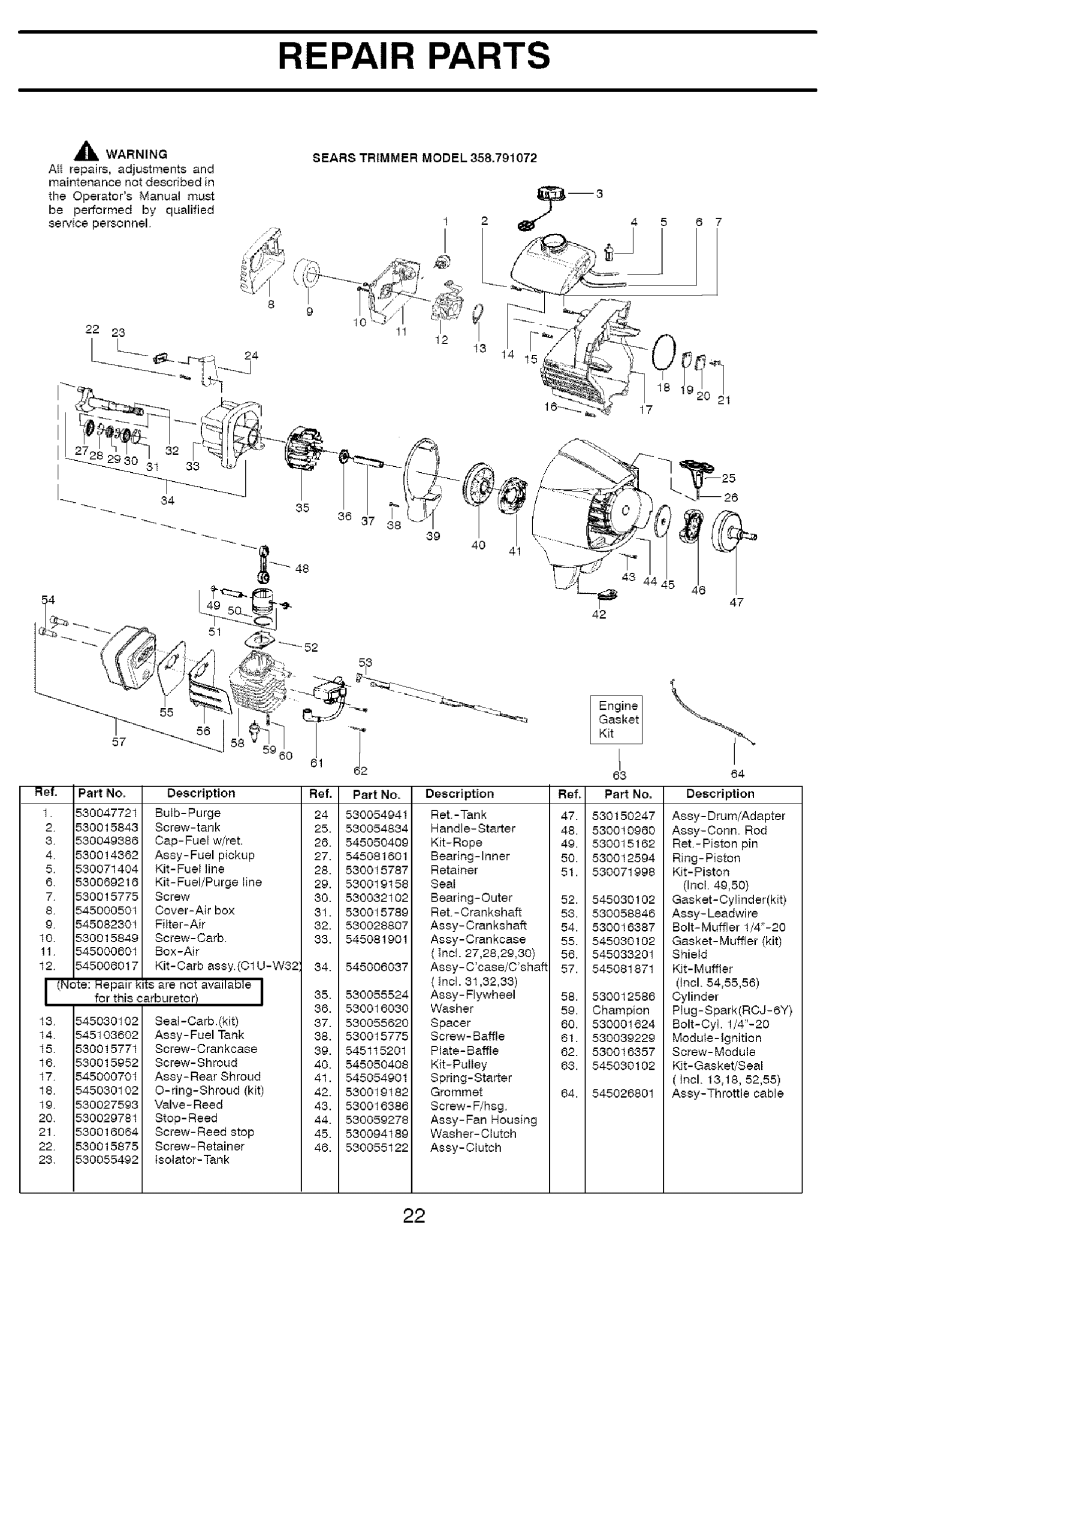 Craftsman 358.791072 Repair Parts, Sears Trimmer Model, 530015849, 530015771, 550016064, 550015875, isolator-Tank, Part No 